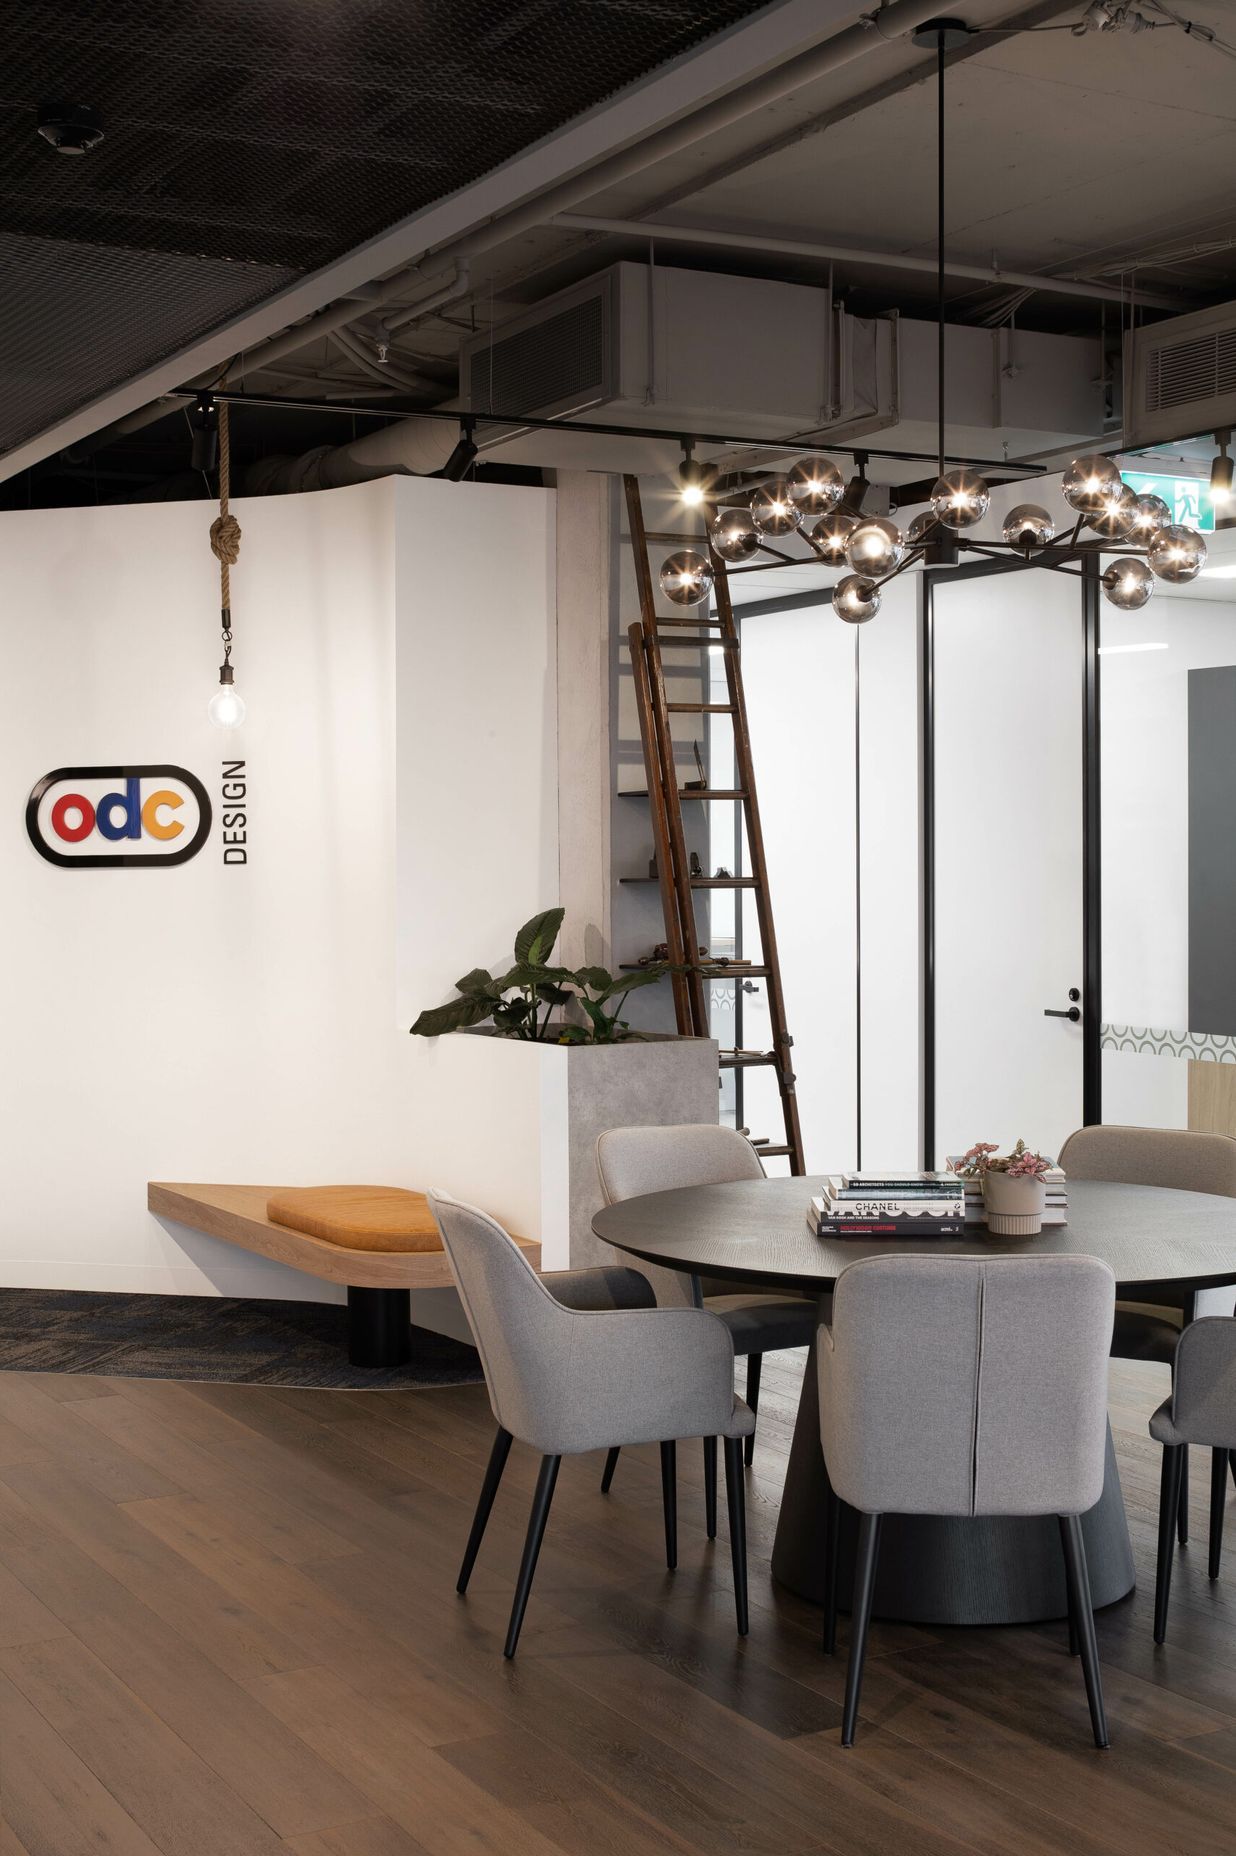 ODC Design Office